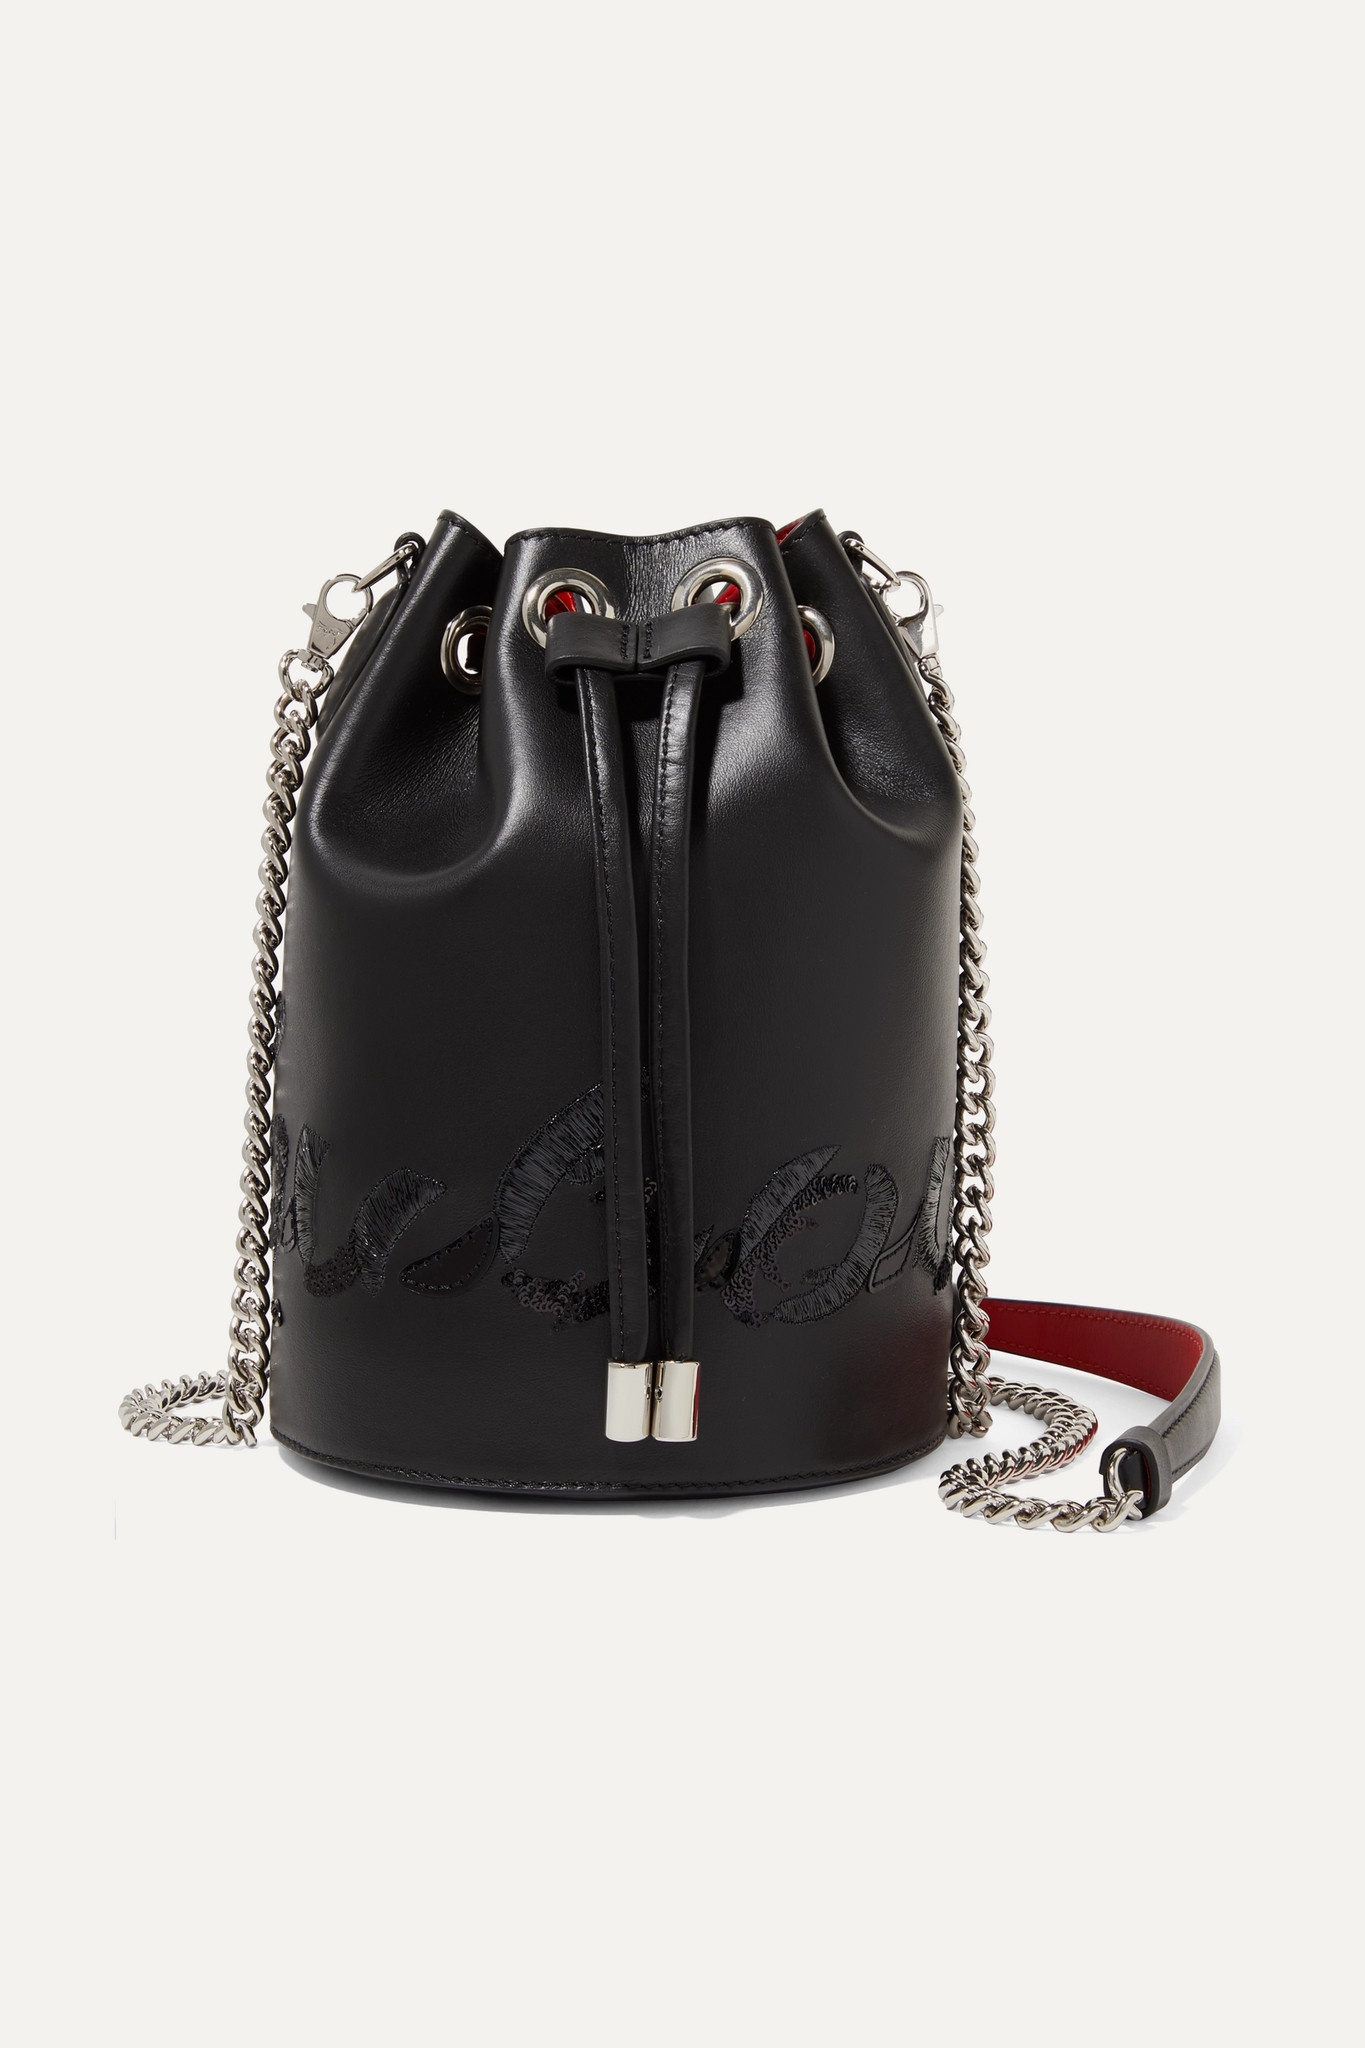 Marie Jane embellished leather bucket bag - 1